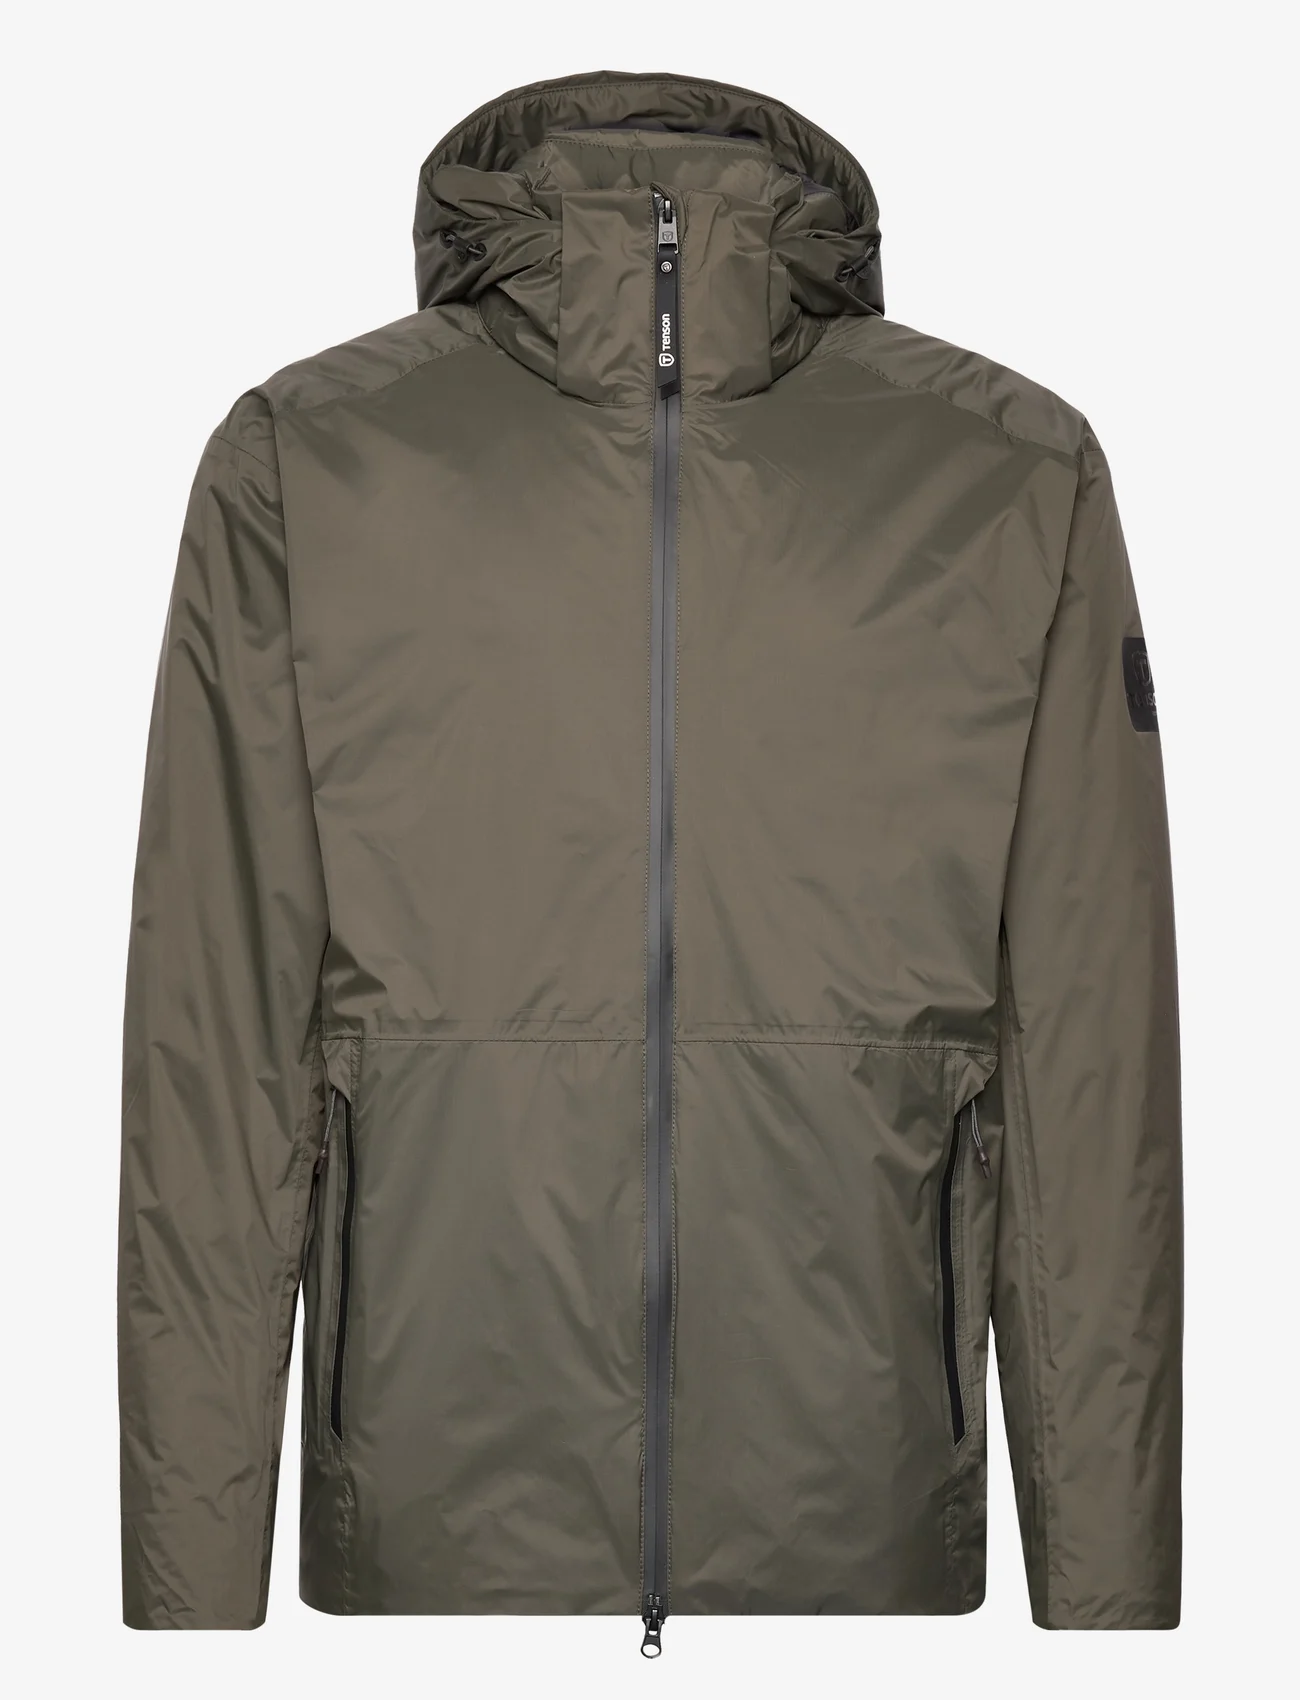 Tenson - Transition Jacket Men - regnjakker - dark olive - 0